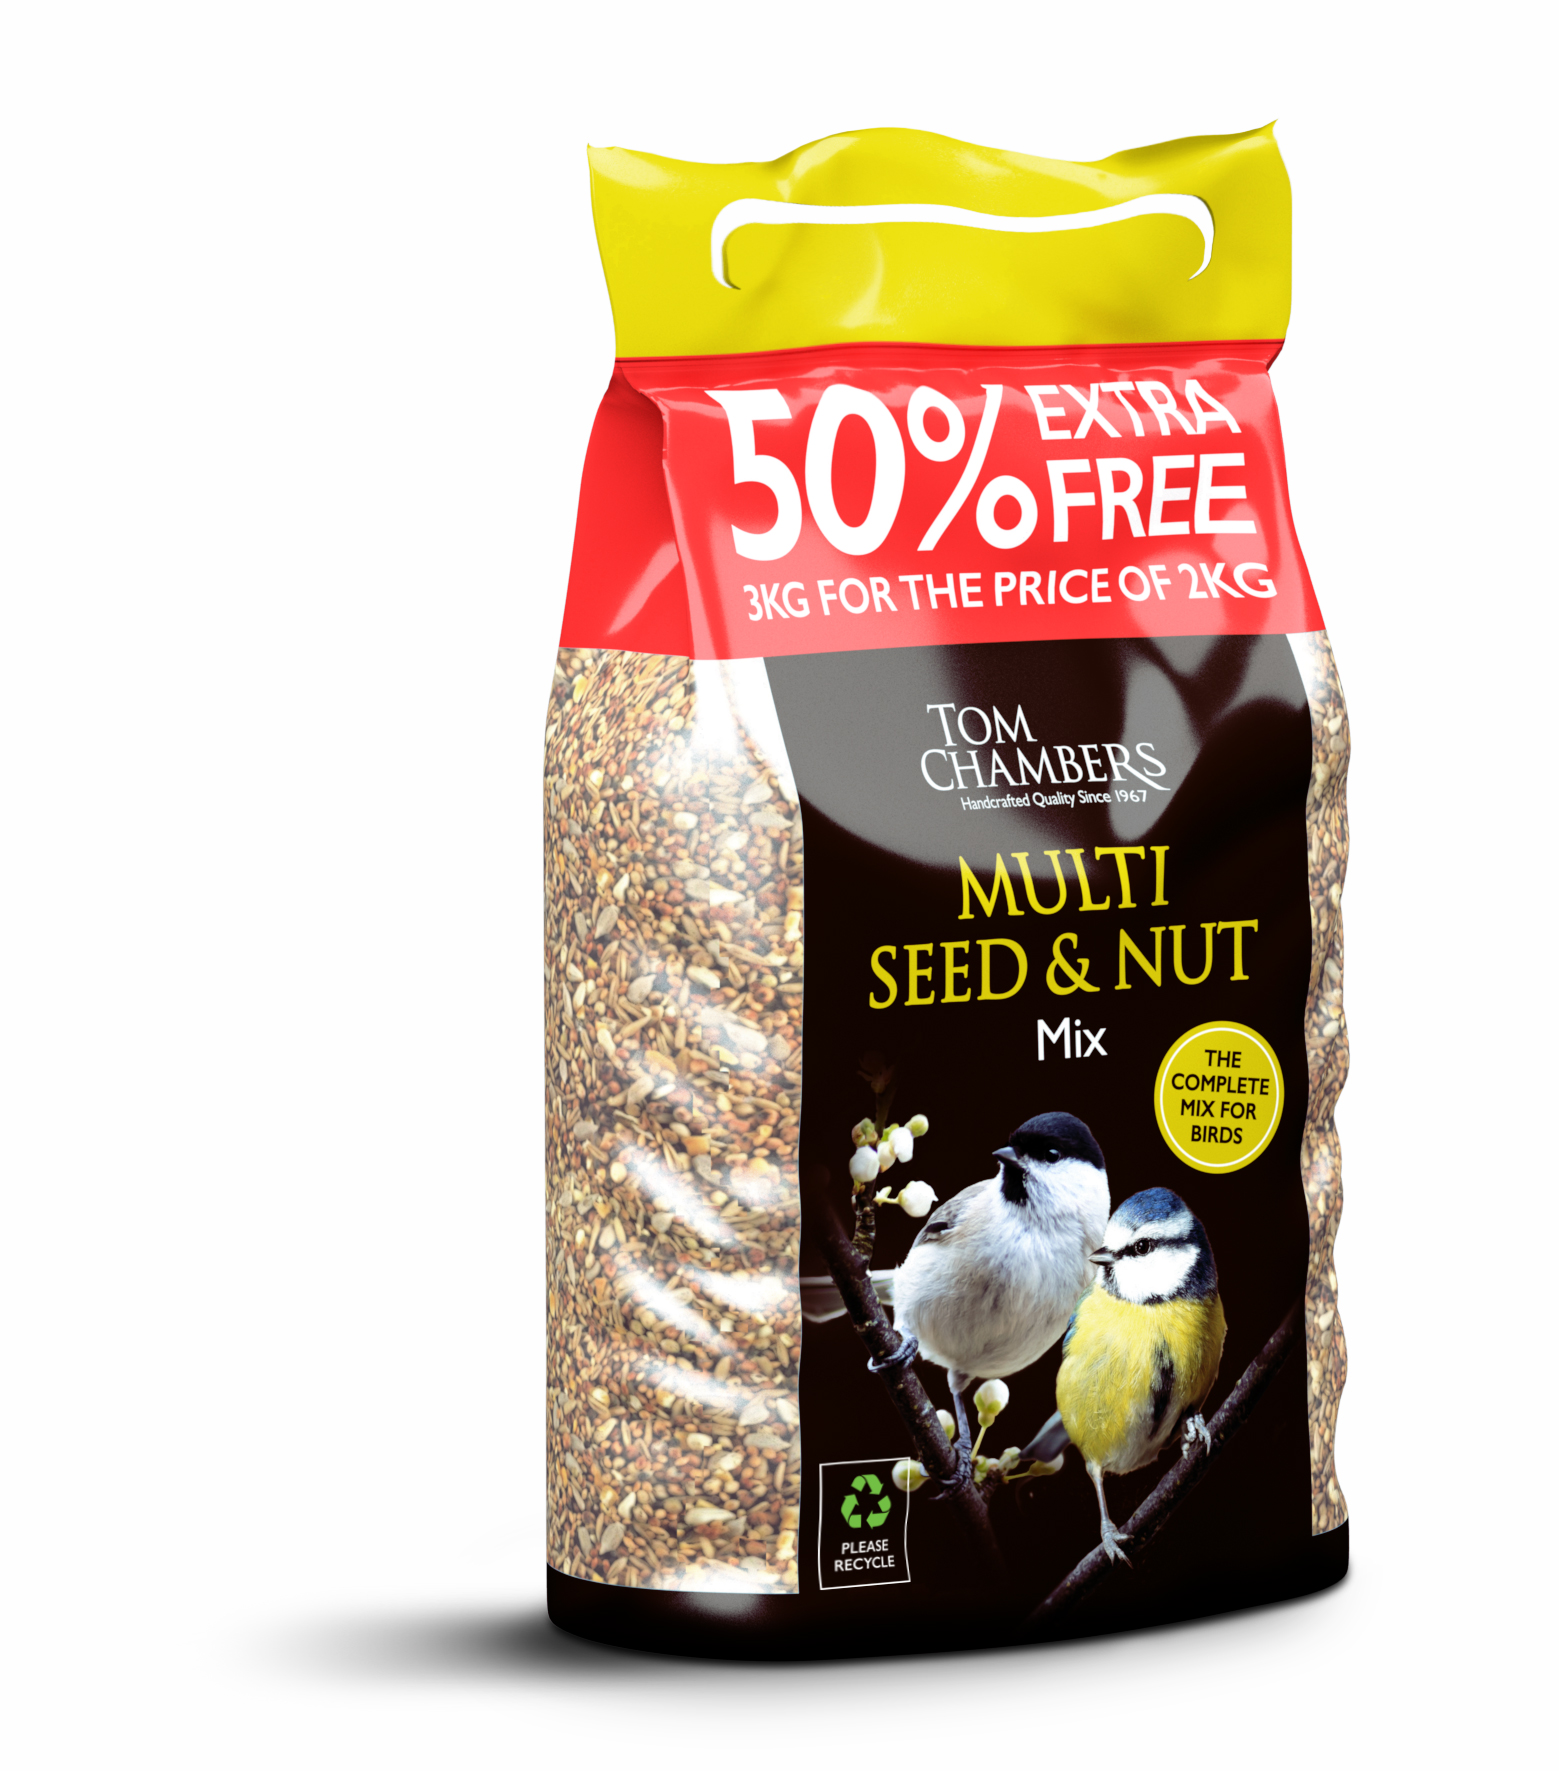 Tom chambers Multi Seed & Nut Mix - 50% FOC - 3kg